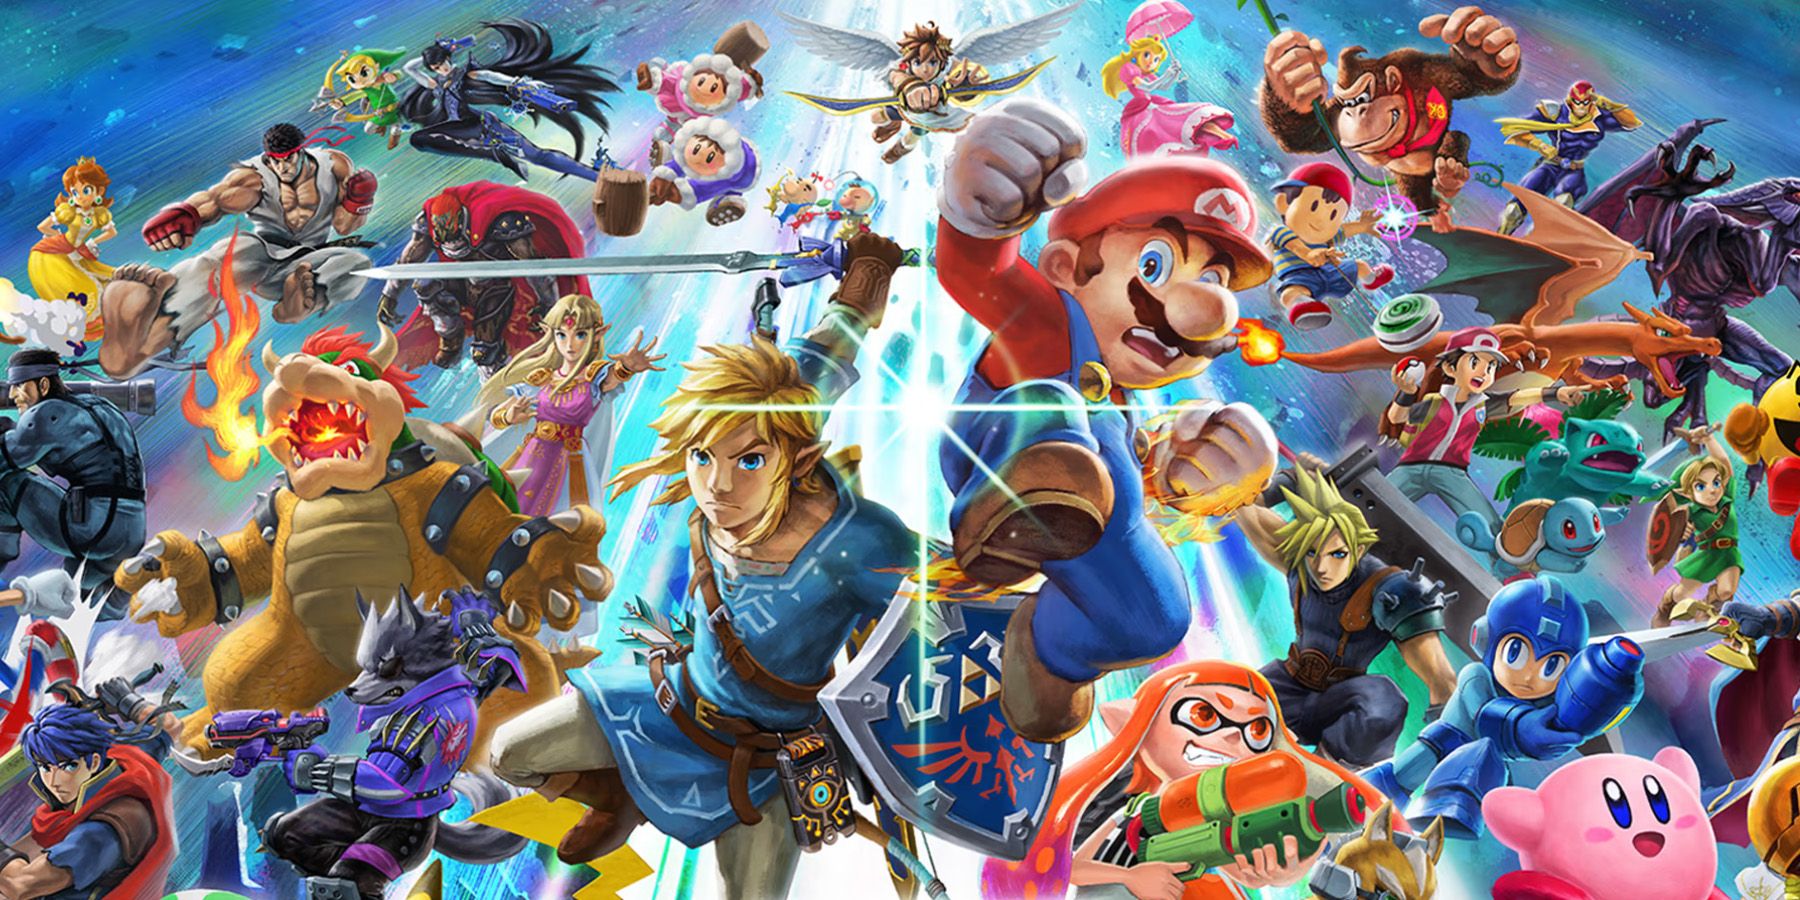 Arte promocional oficial de Super Smash Bros. Ultimate